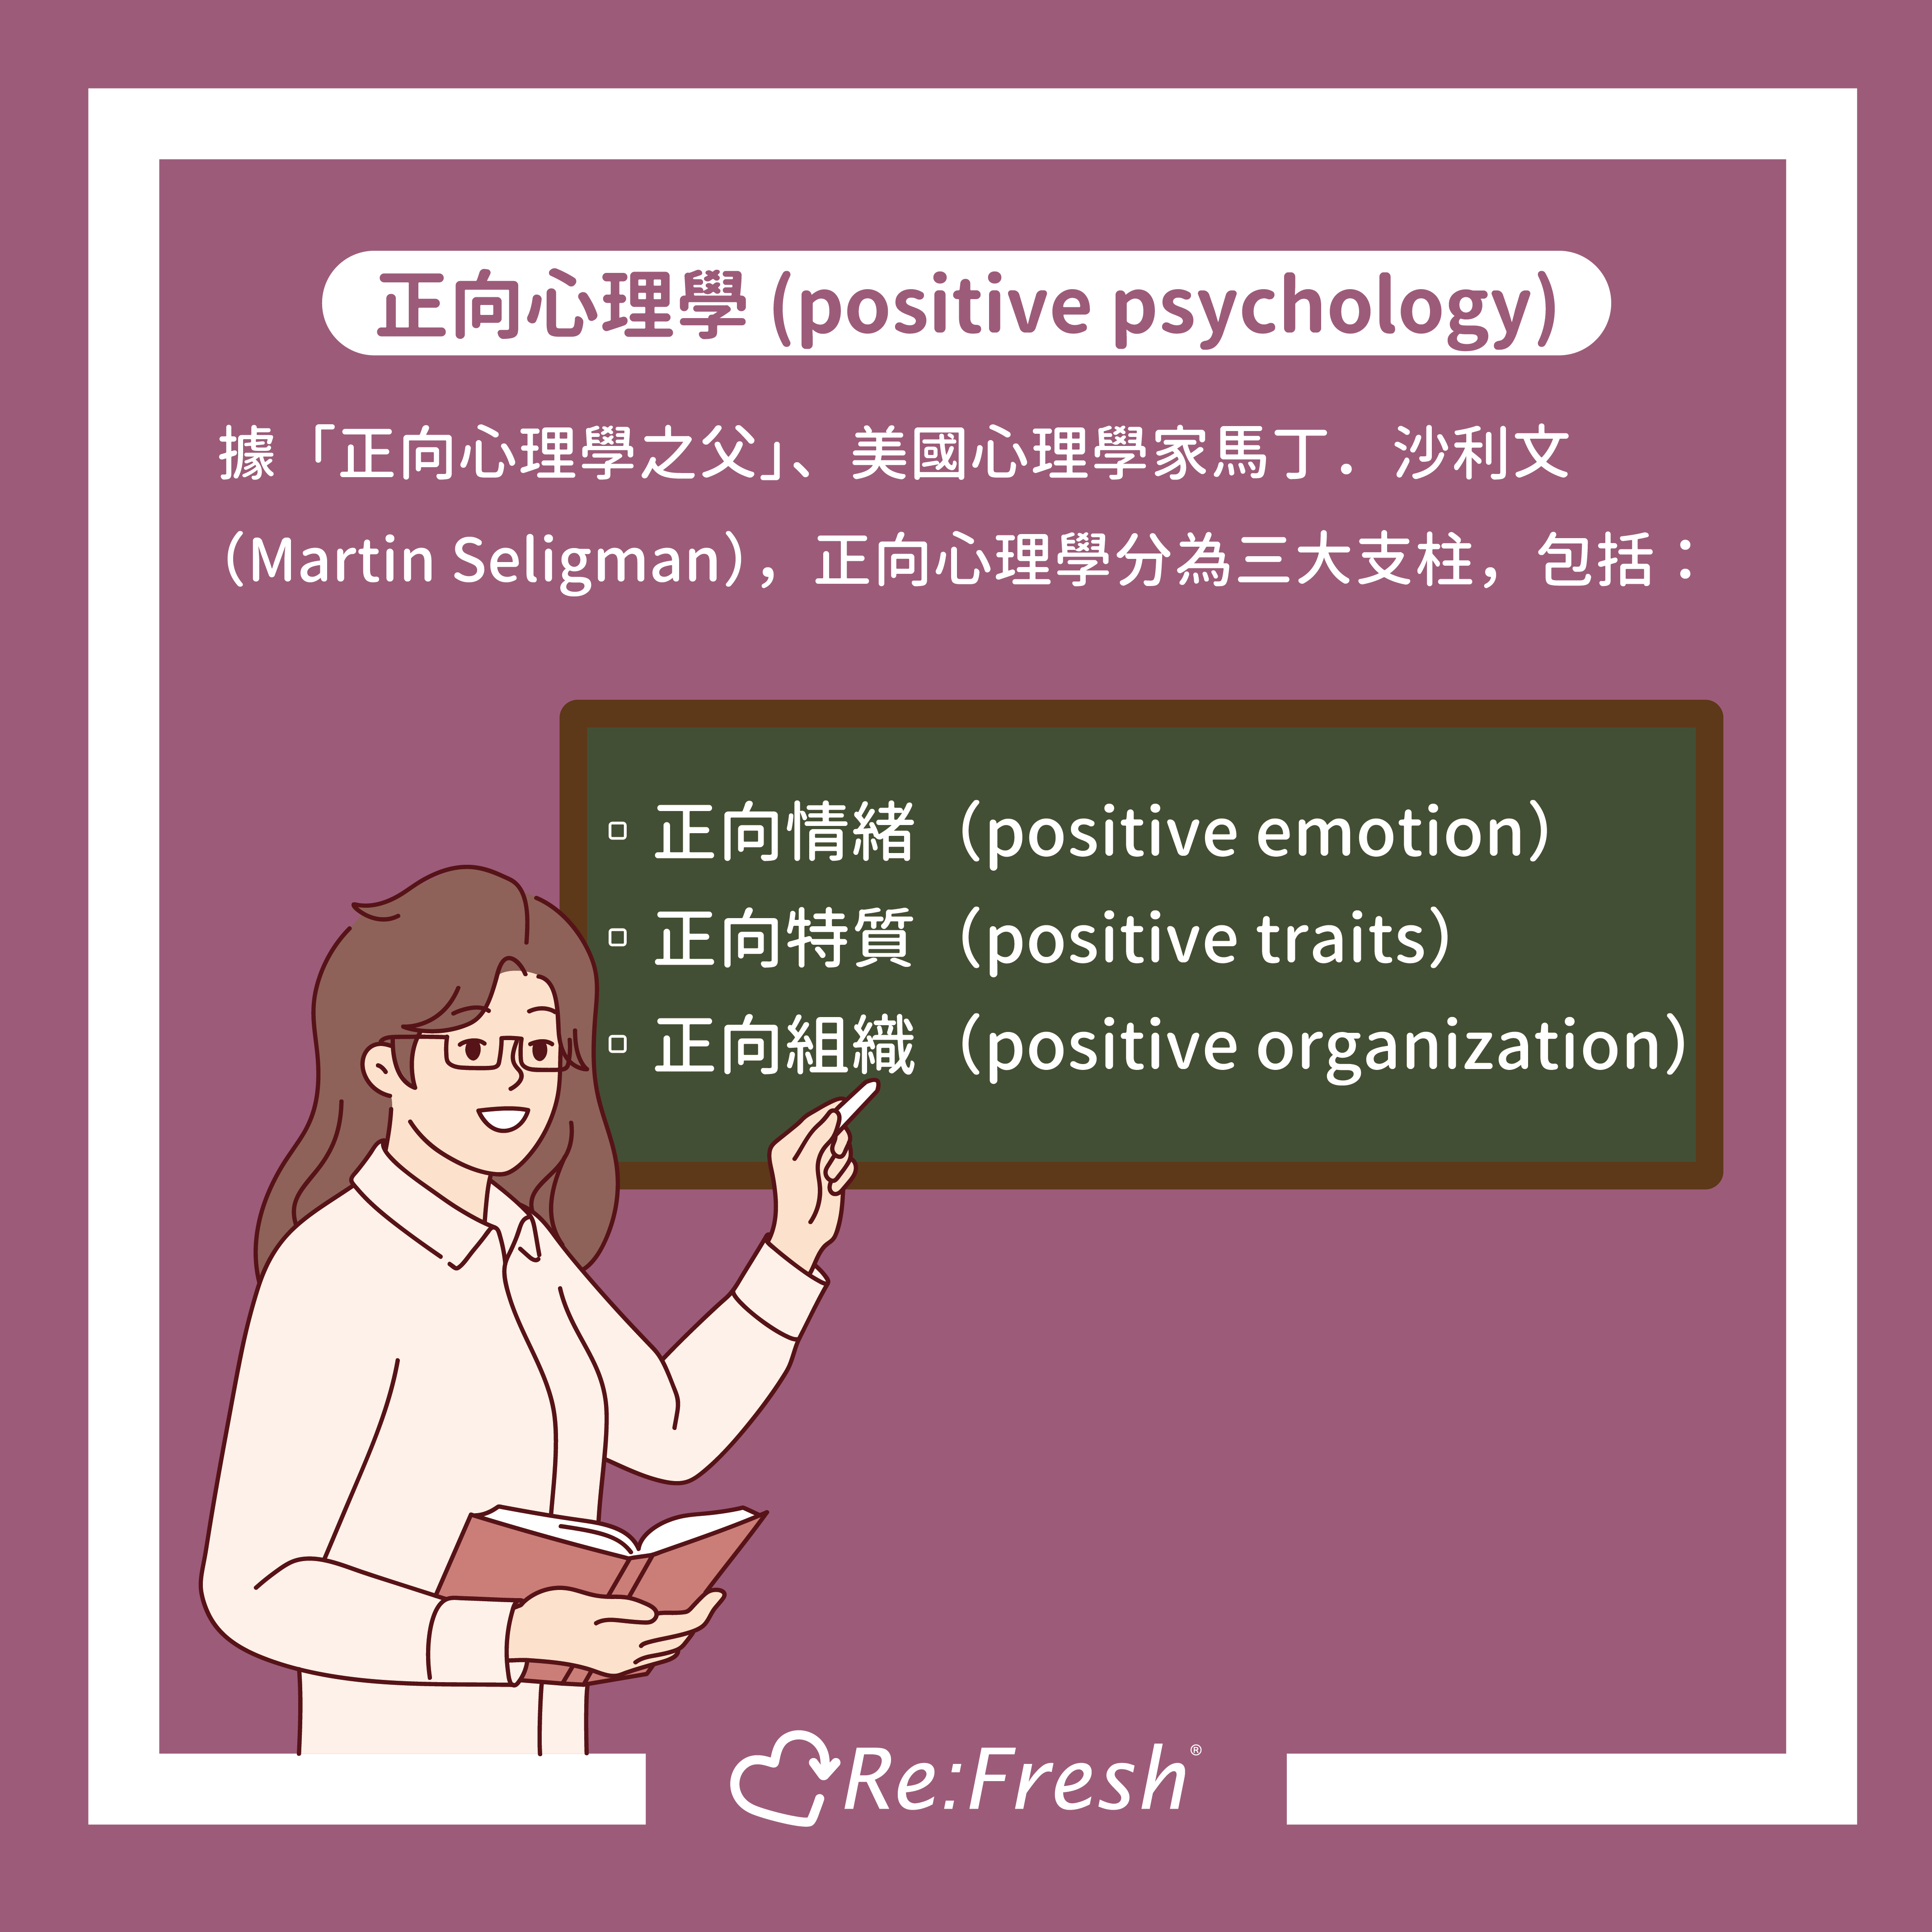 positive psychology include emotion, trait and organization